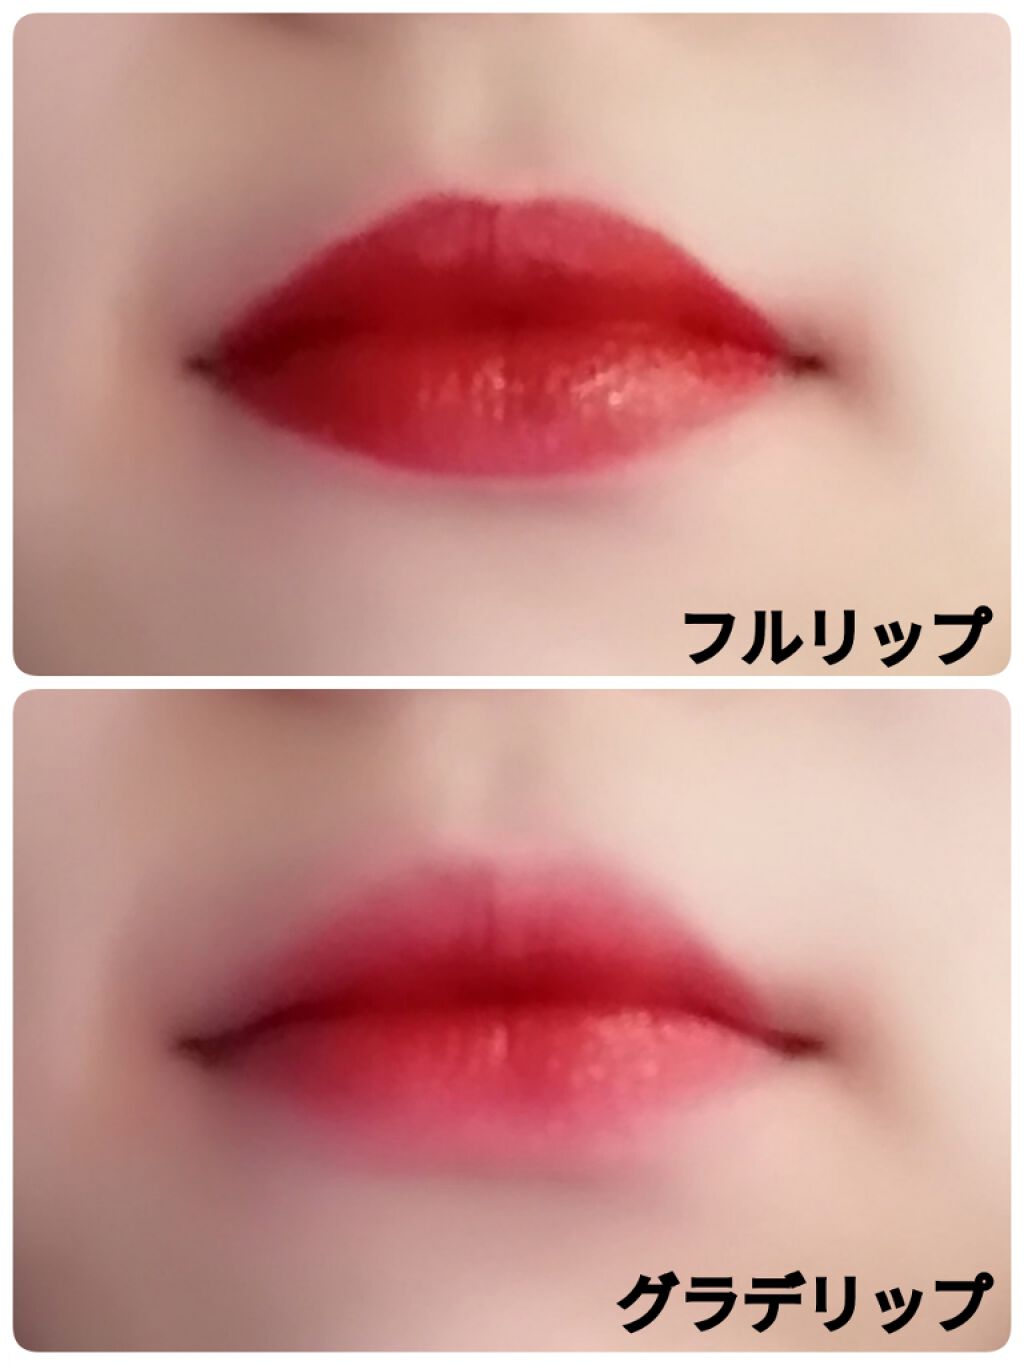 Lip Color 3ceの口コミ 唇写真あります韓国人になれるマットリップ By みさき 乾燥肌 10代後半 Lips